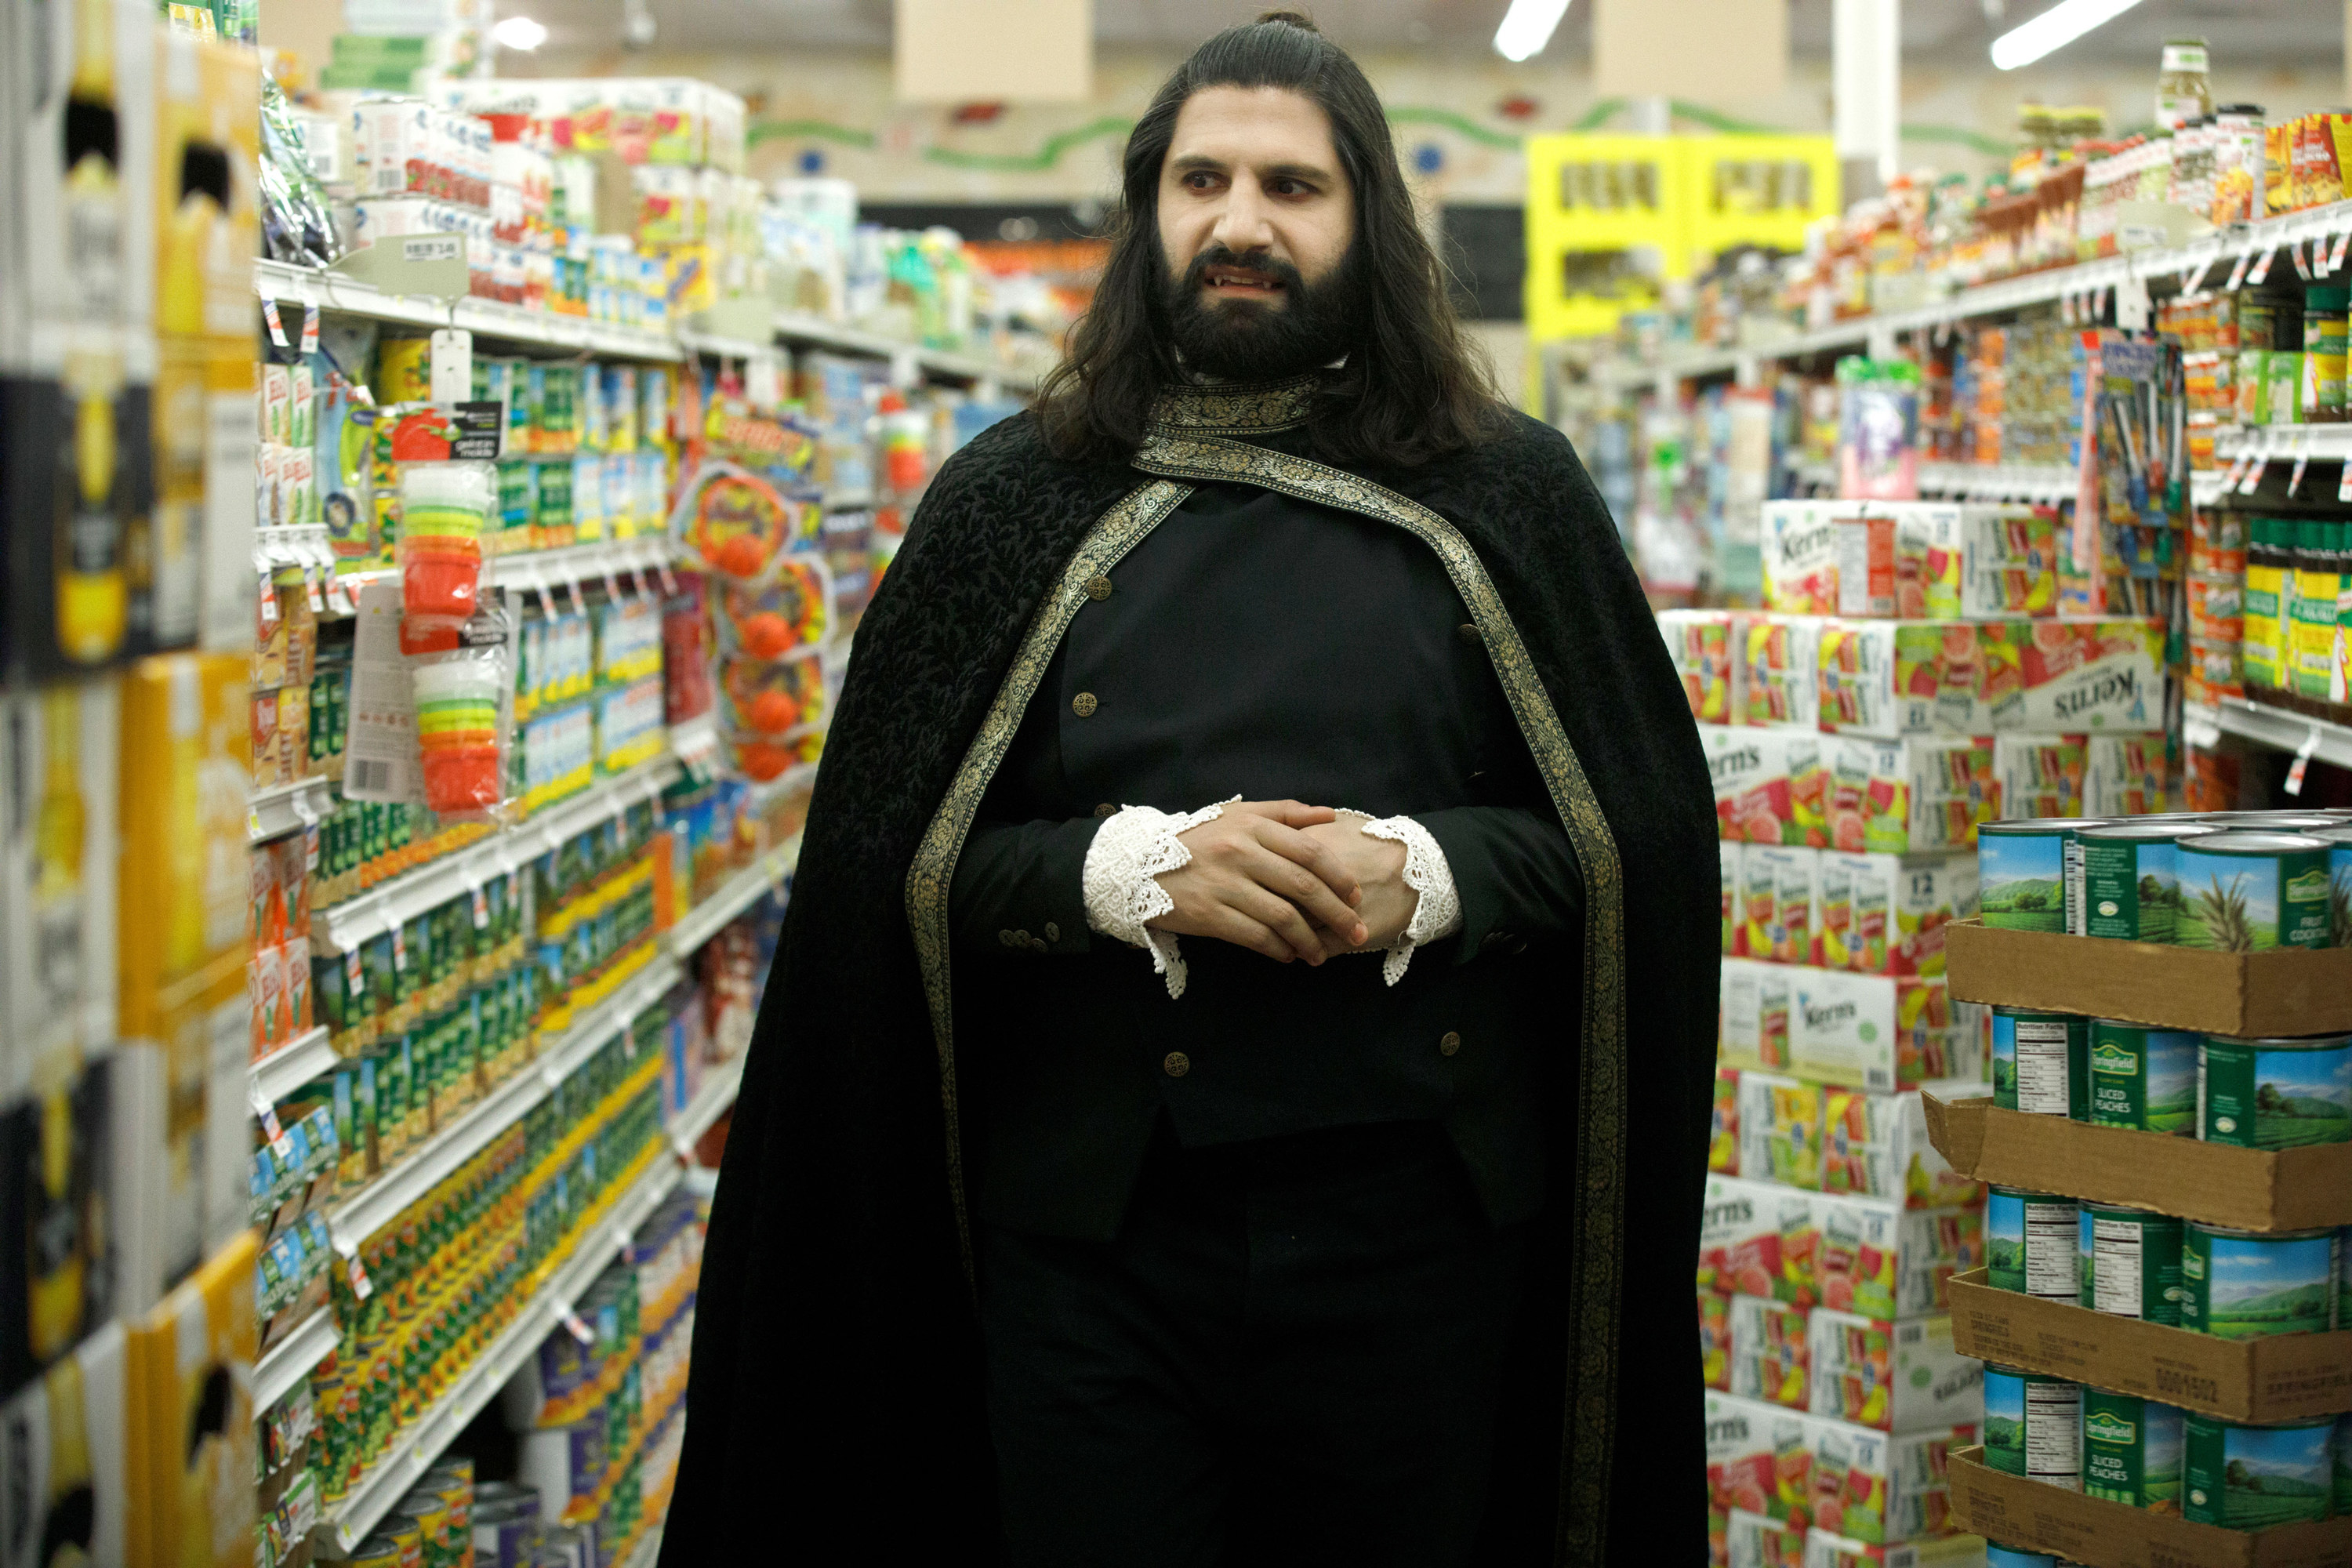 Nandor walking through a grocery store